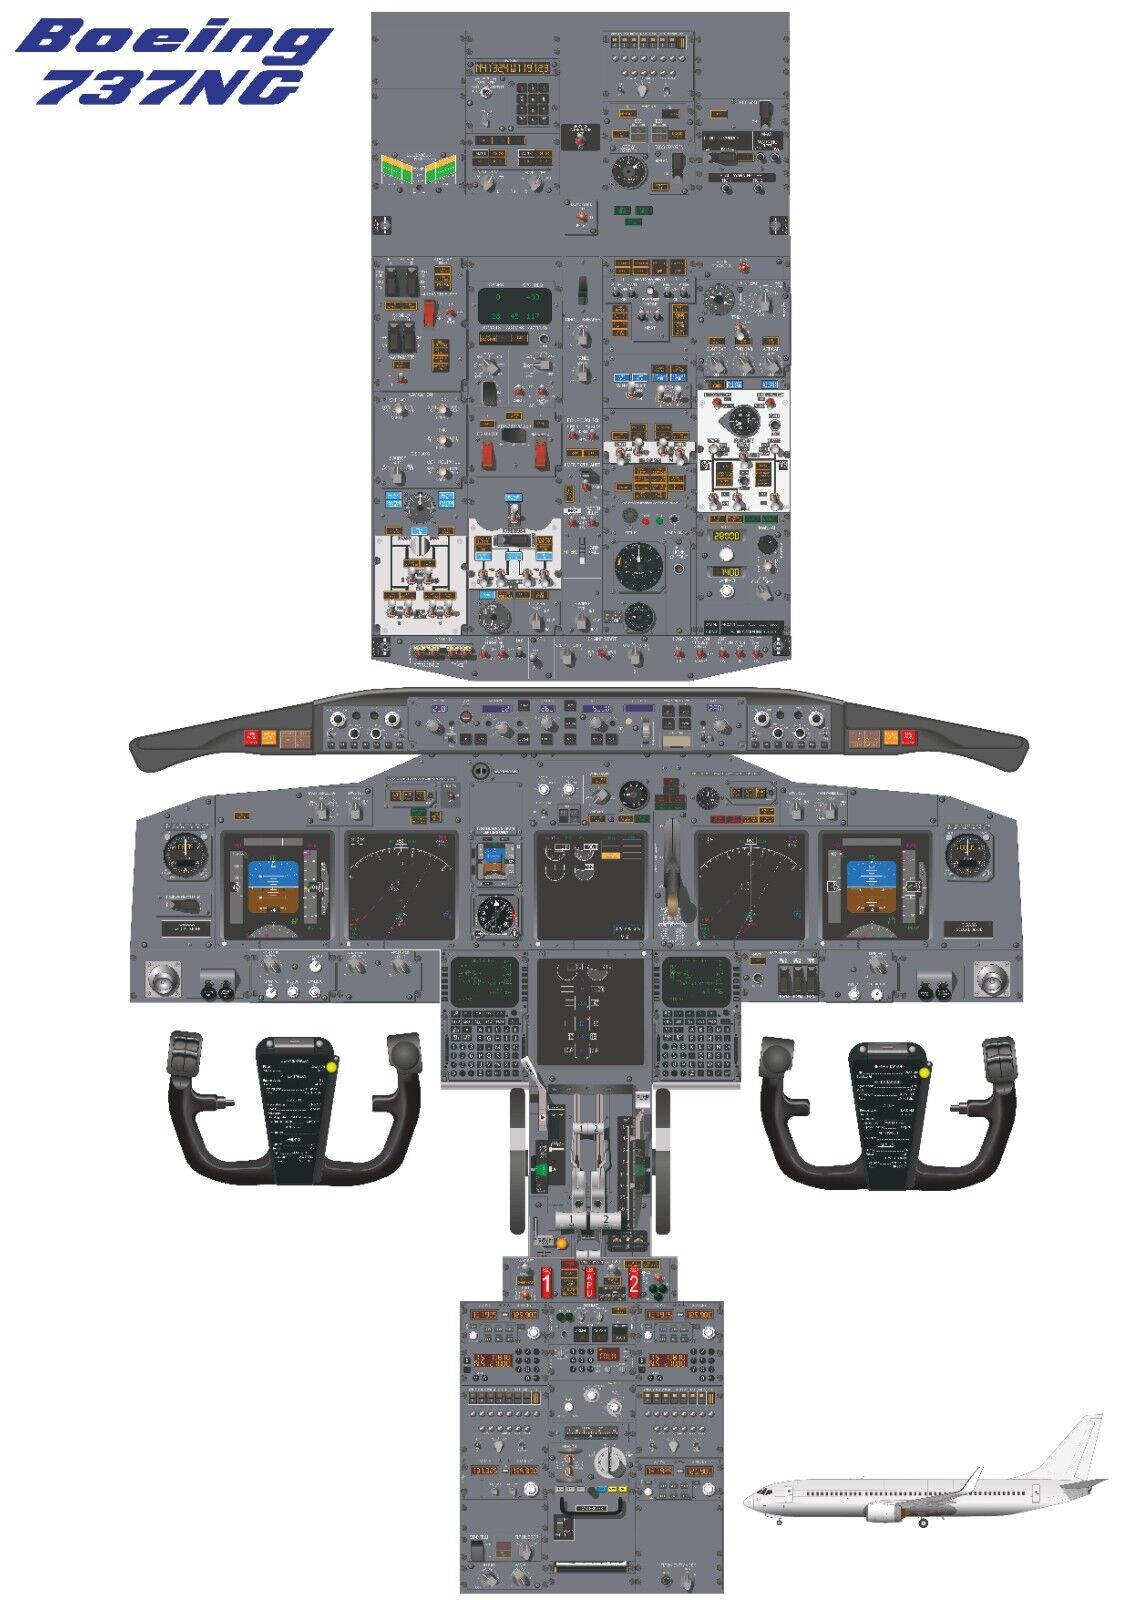 Boeing 737 NG Cockpit Poster